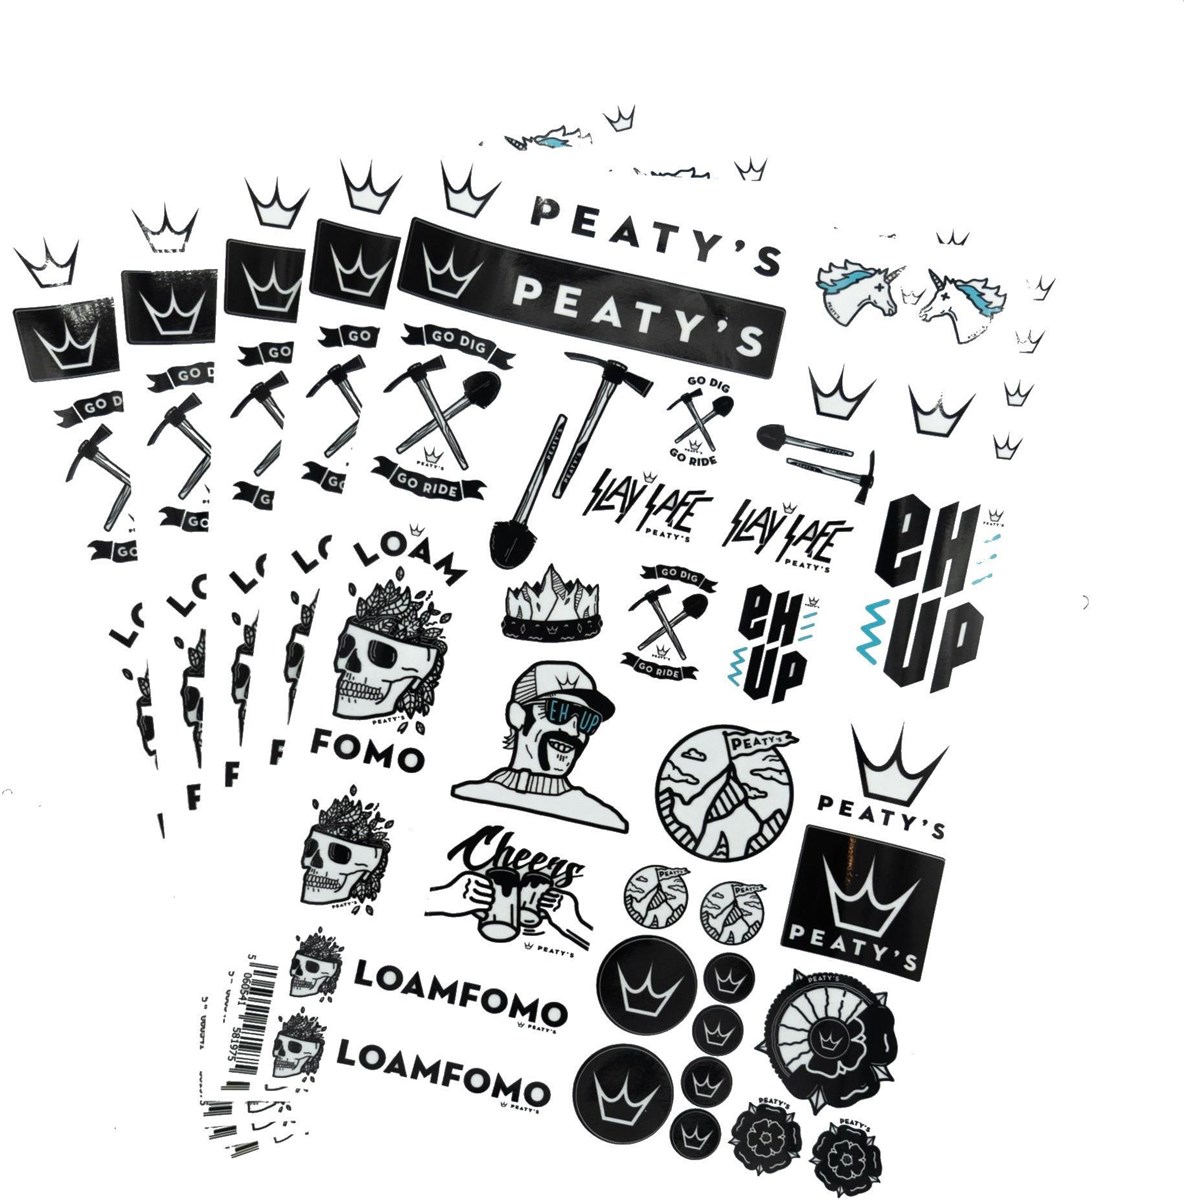 Peatys Sticker Pack product image